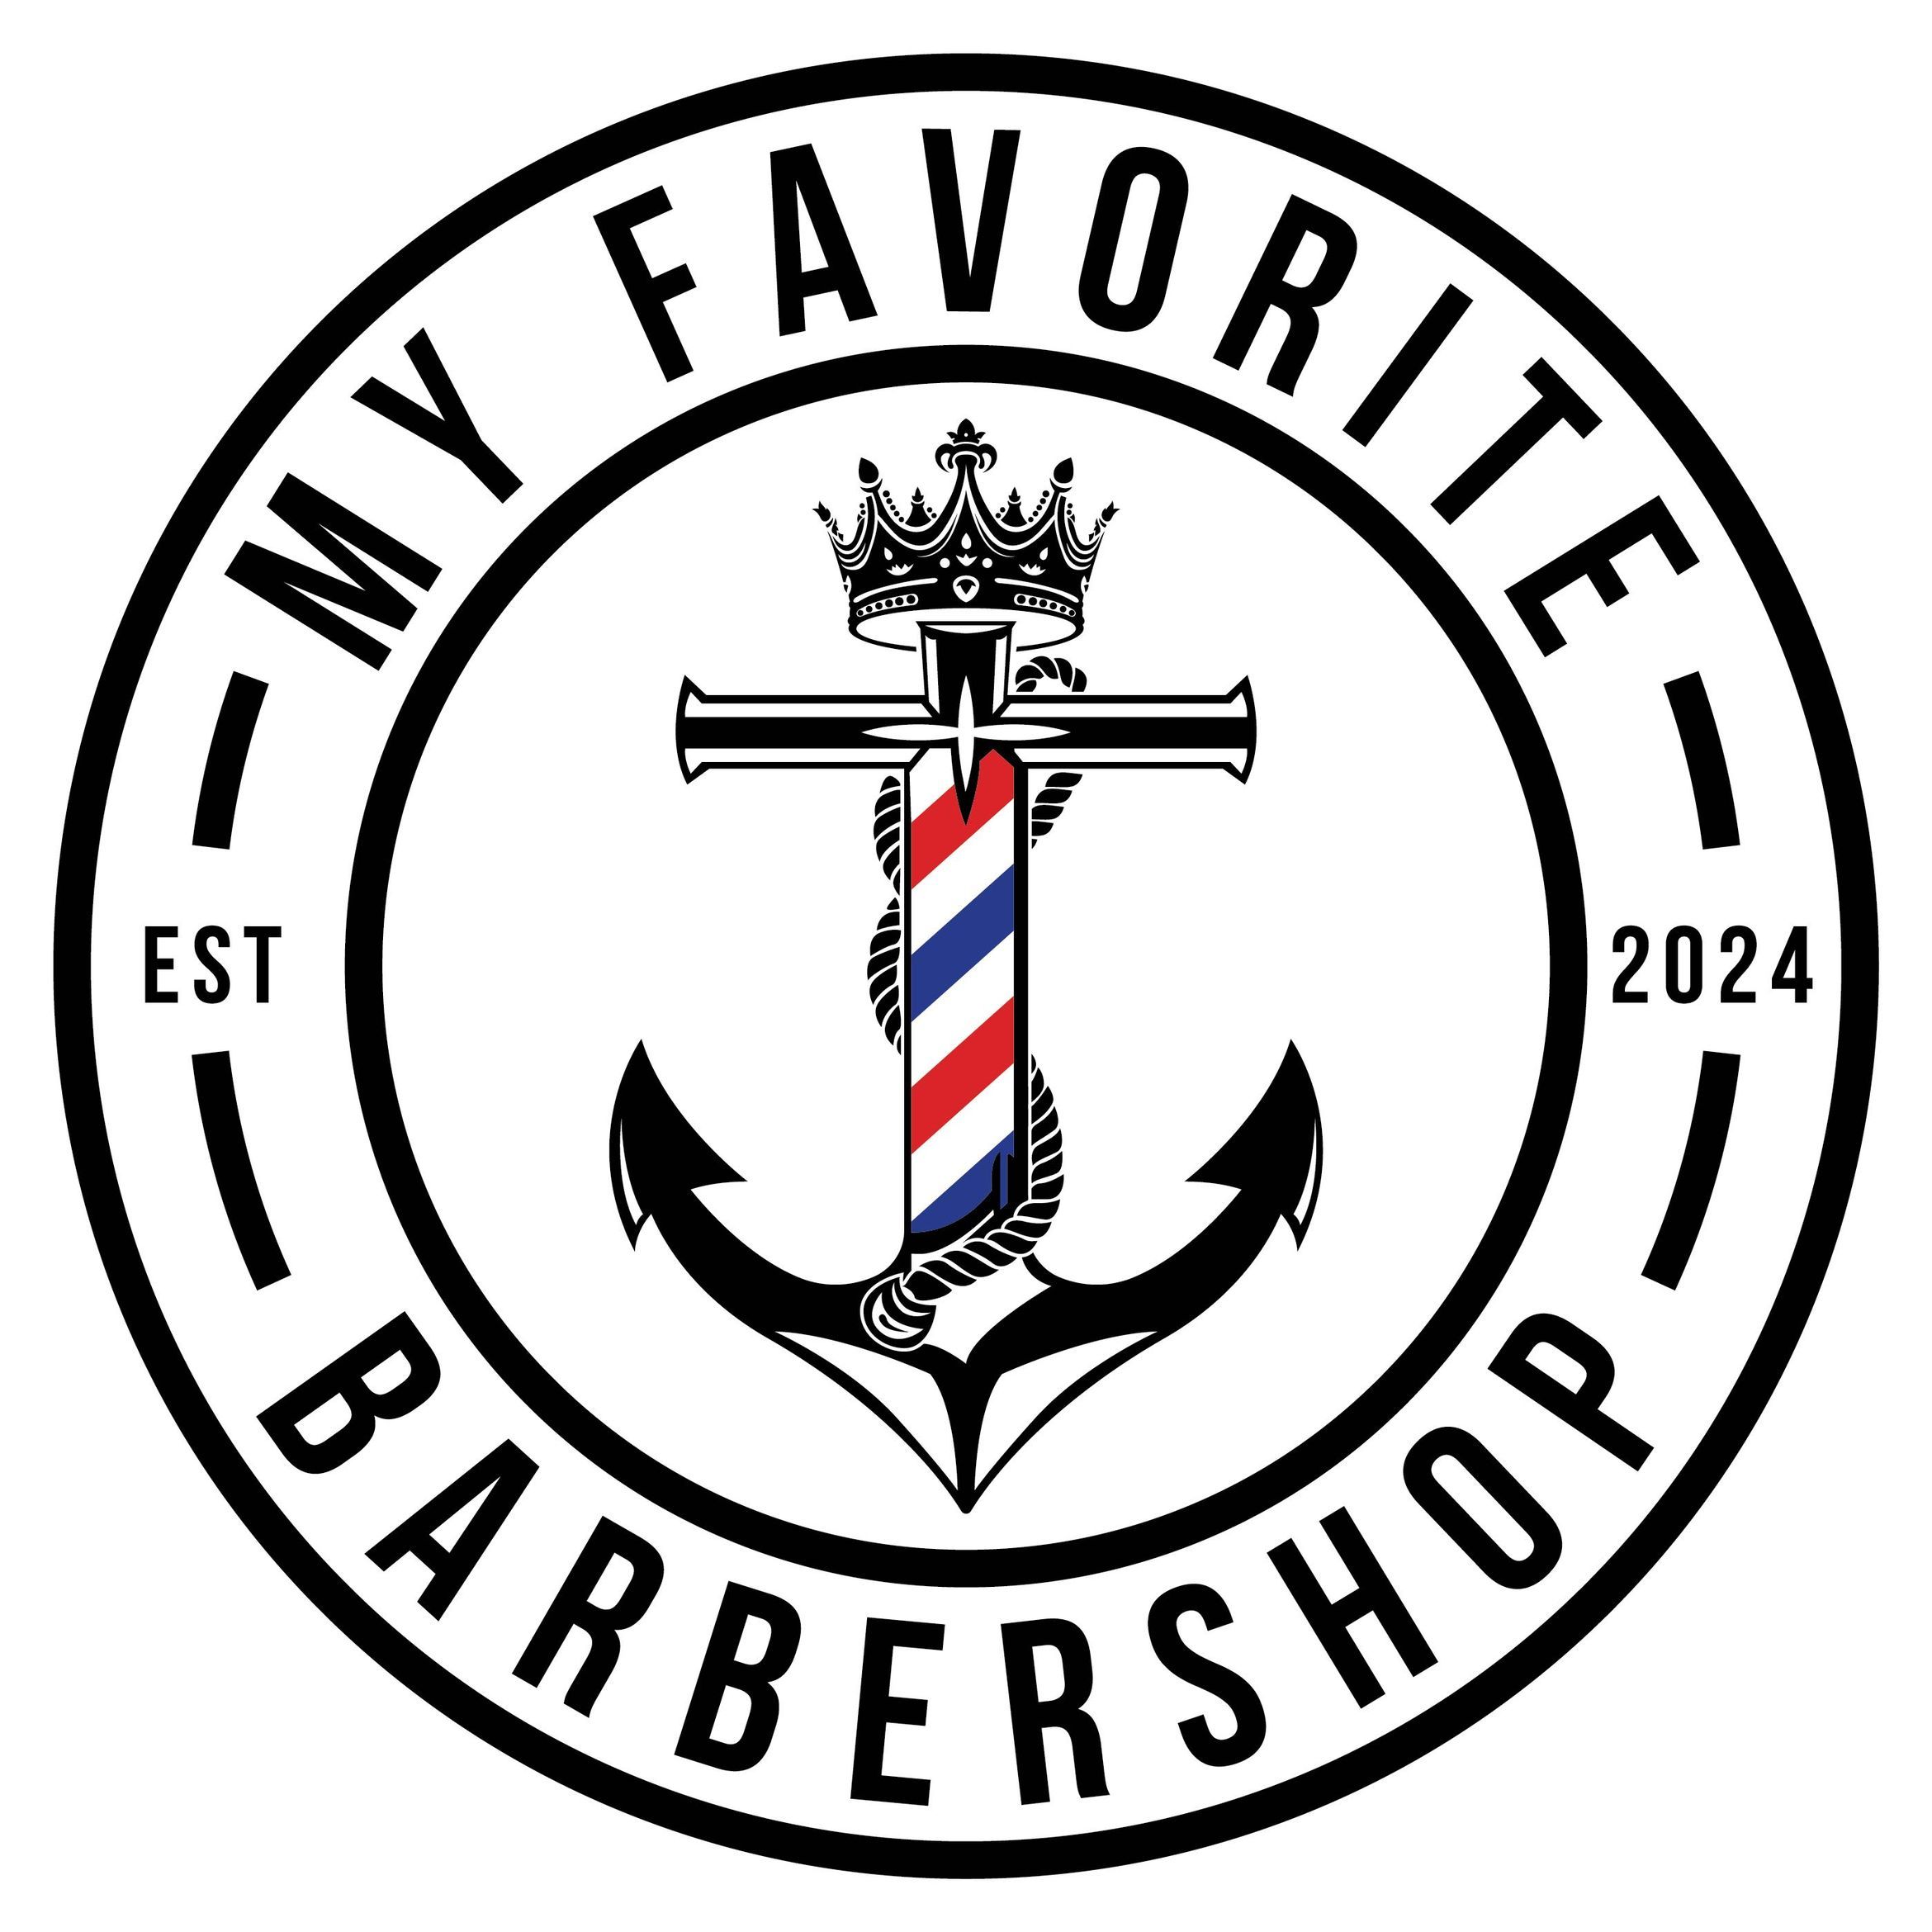 MY FAVORITE barbershop, 709 warwick ave, My Favorite Barbershop, Warwick, 02888